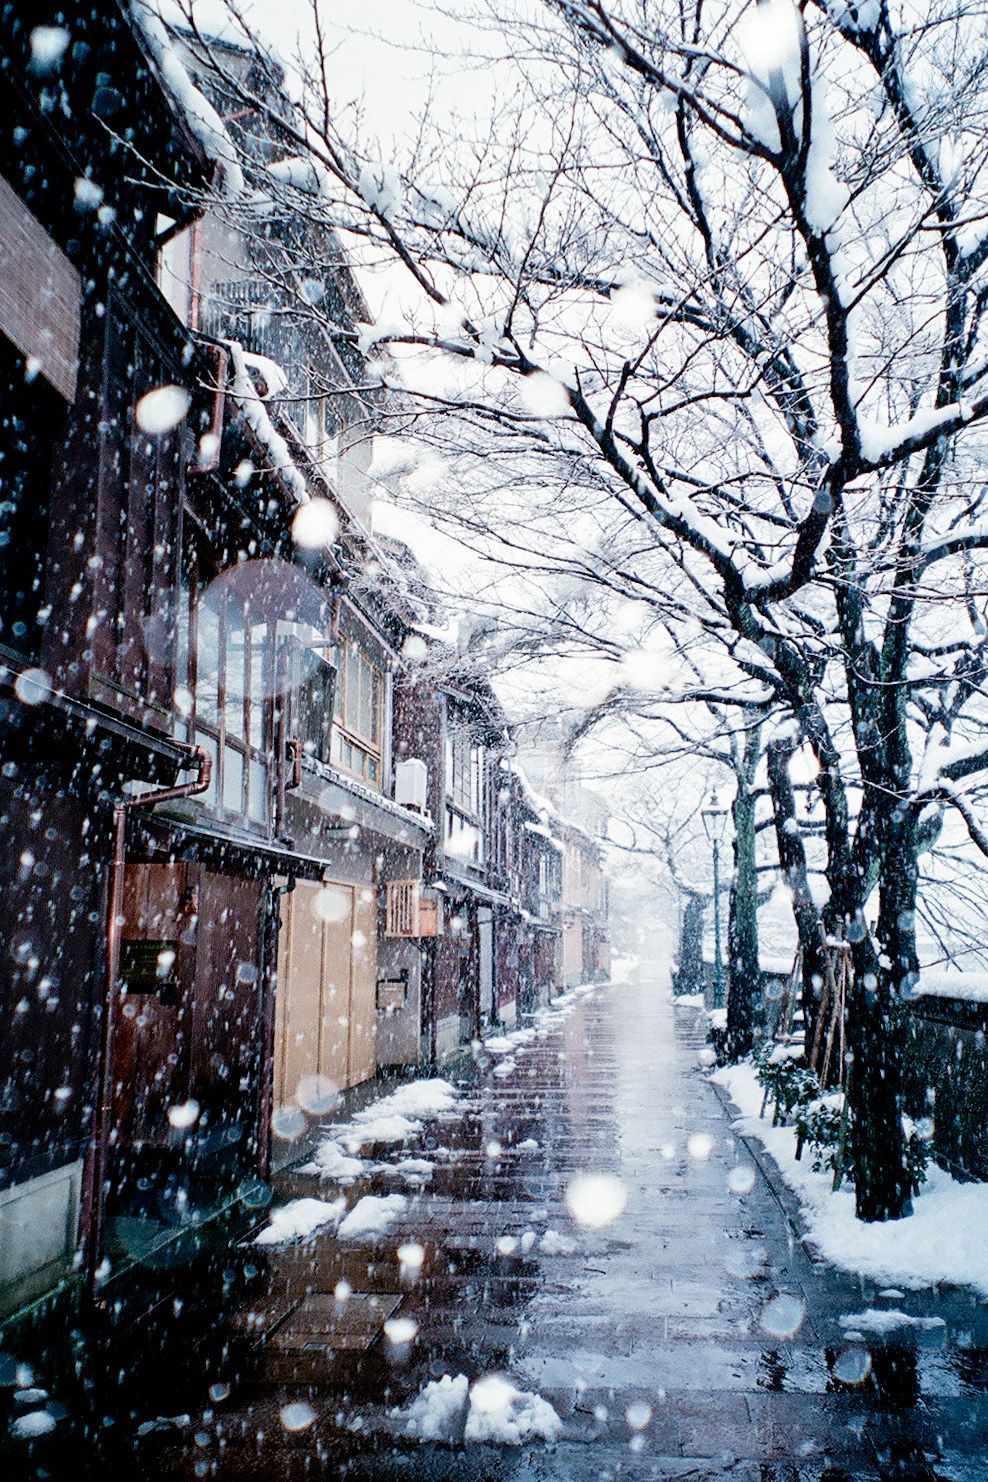 f*ckyeahjapanandkorea: 金沢主計町 by tobimaru. Japan photography, Anime scenery, Winter in japan